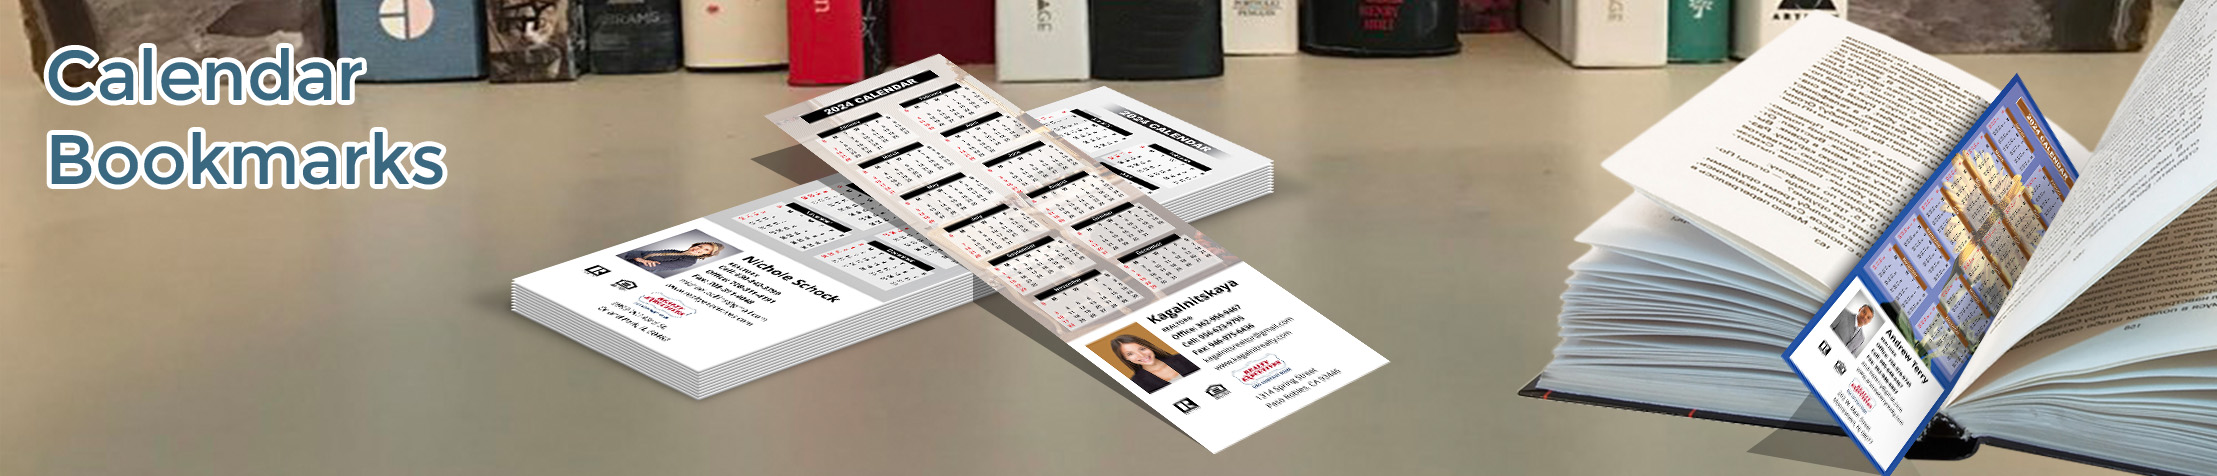 Realty Executives Real Estate Calendar Bookmarks - Realty Executives  2019 calendars printed on book markers | BestPrintBuy.com